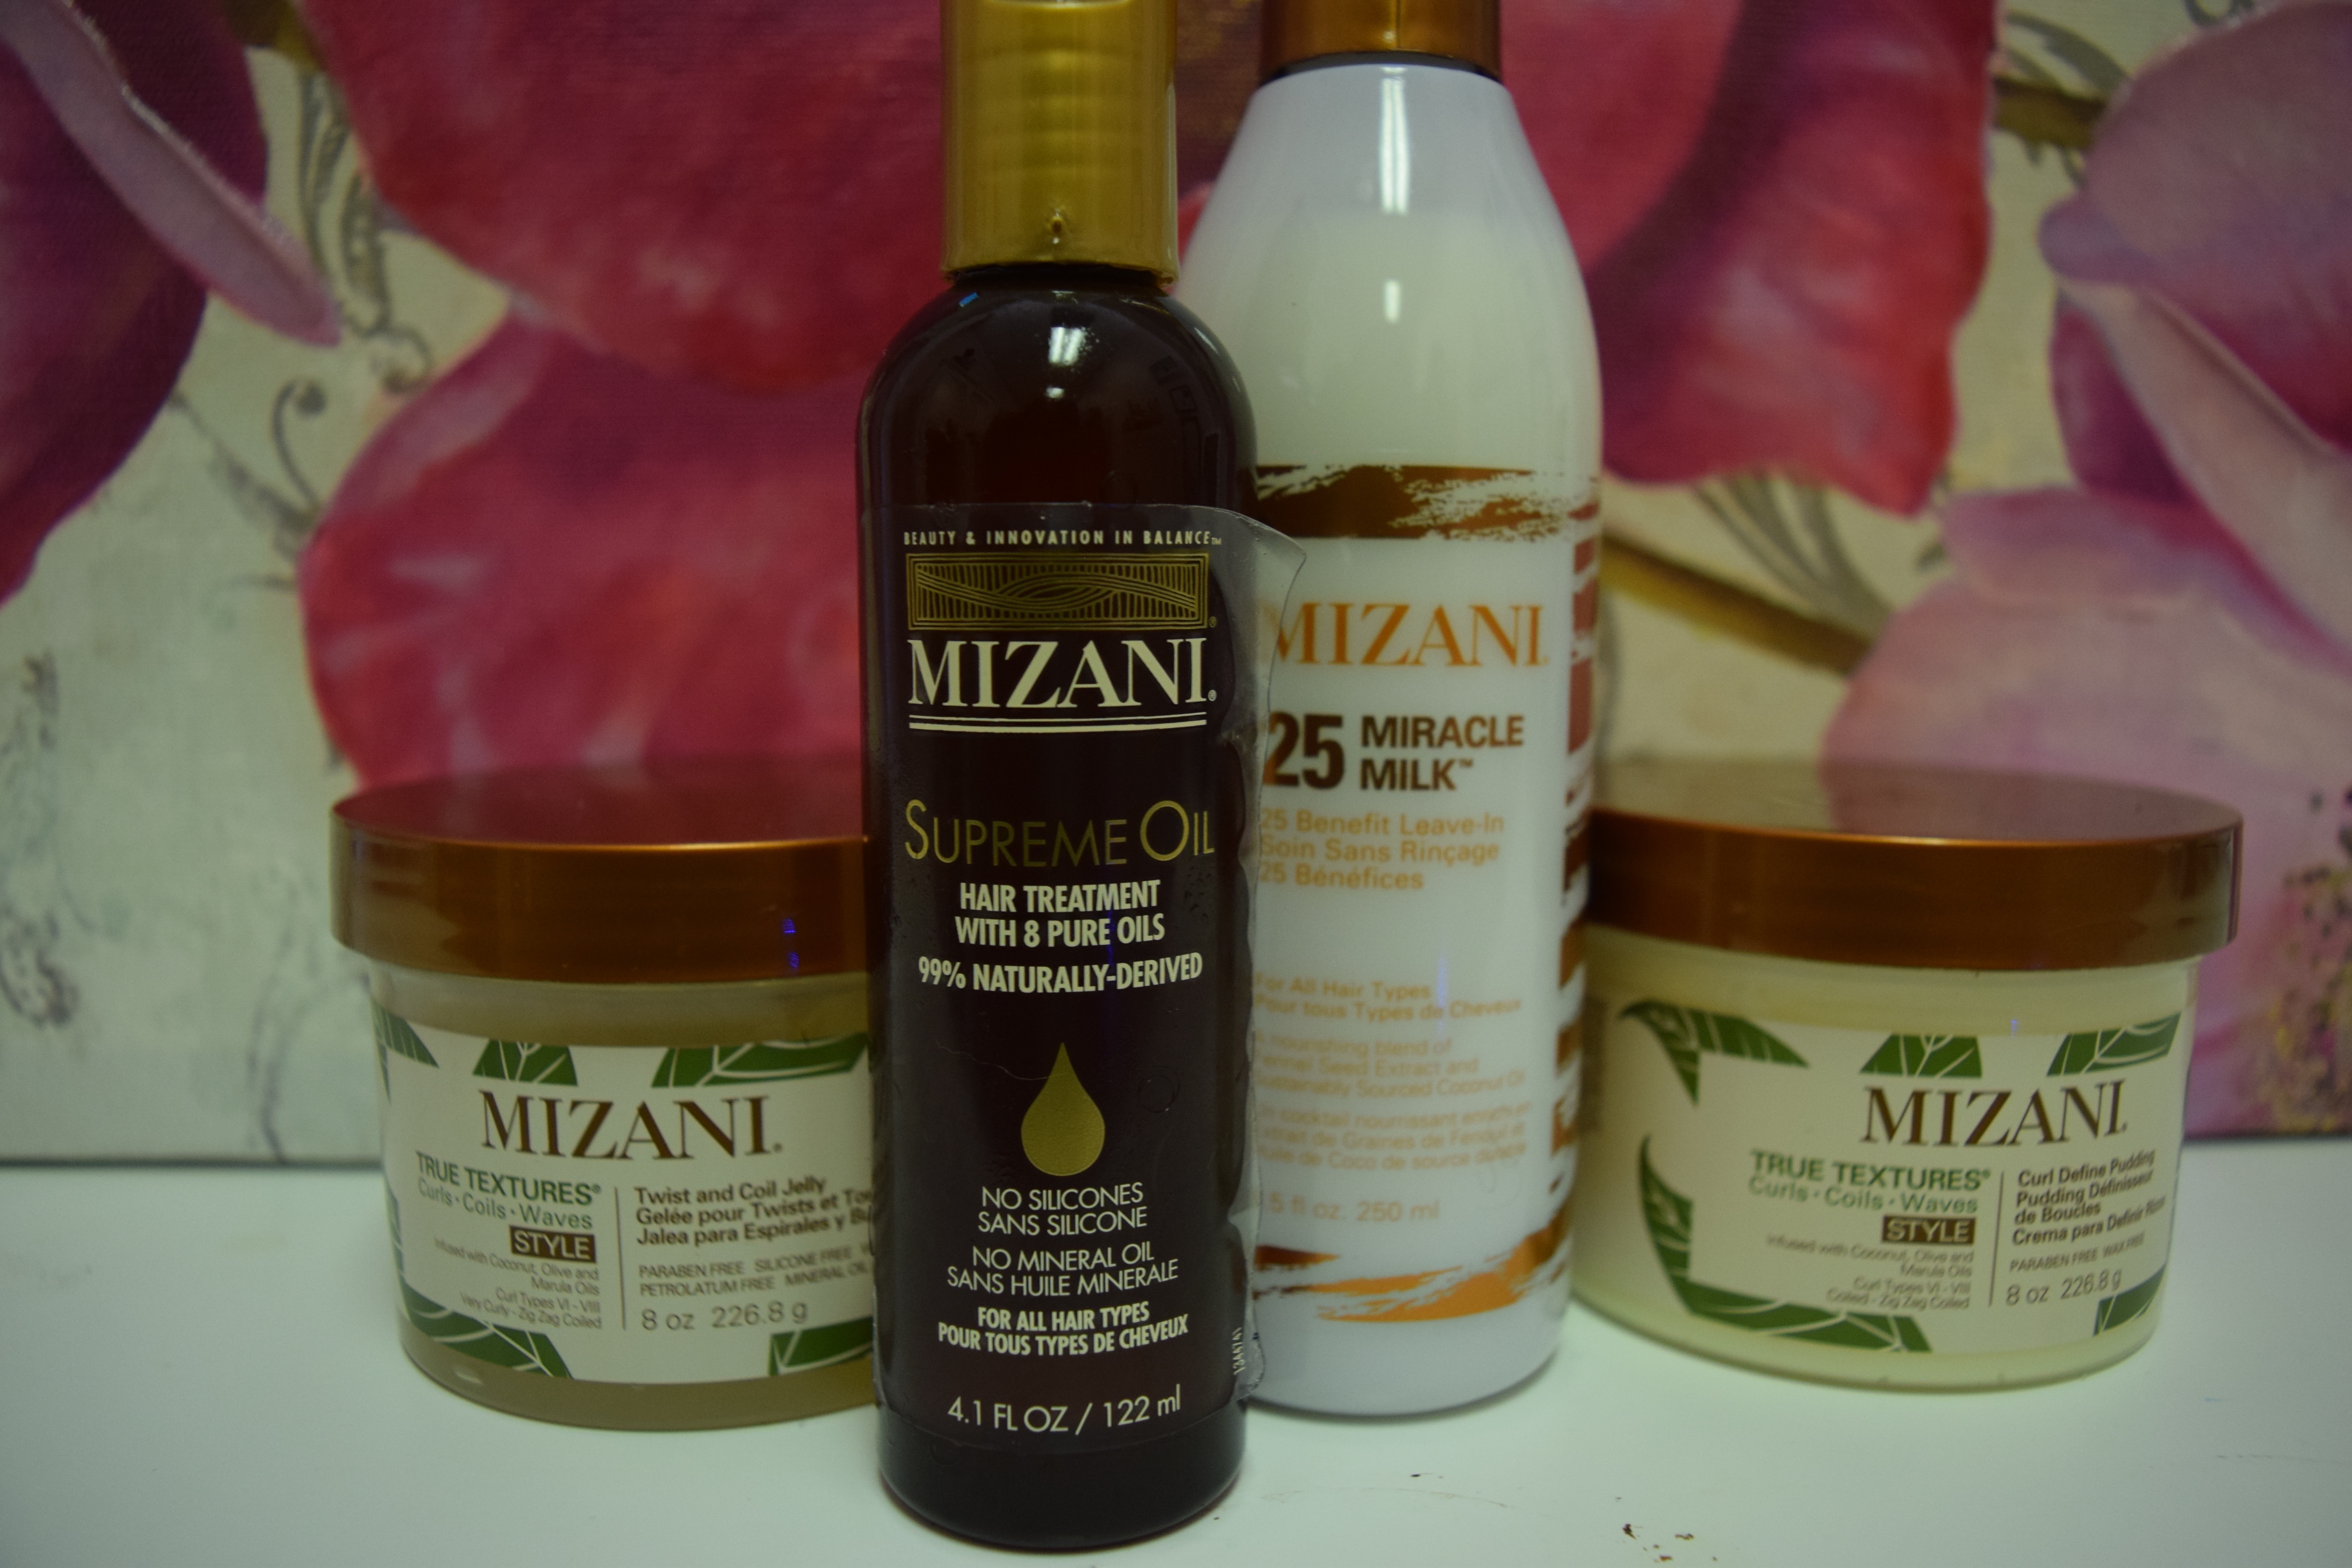 Mizani Products For LOC